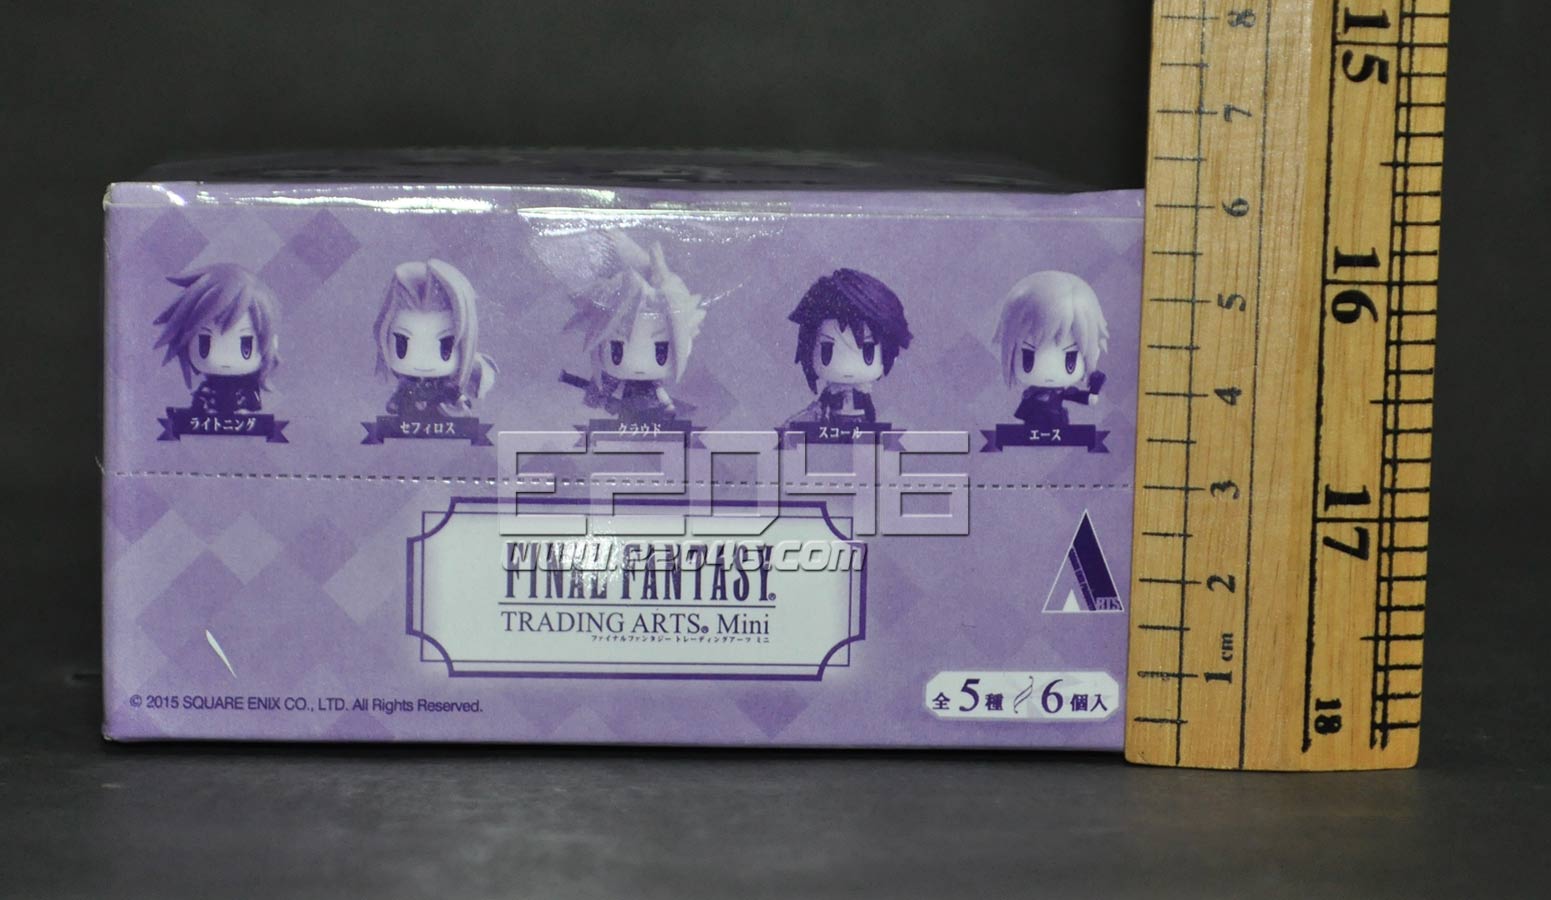 Final Fantasy Trading Arts Mini 6 pieces